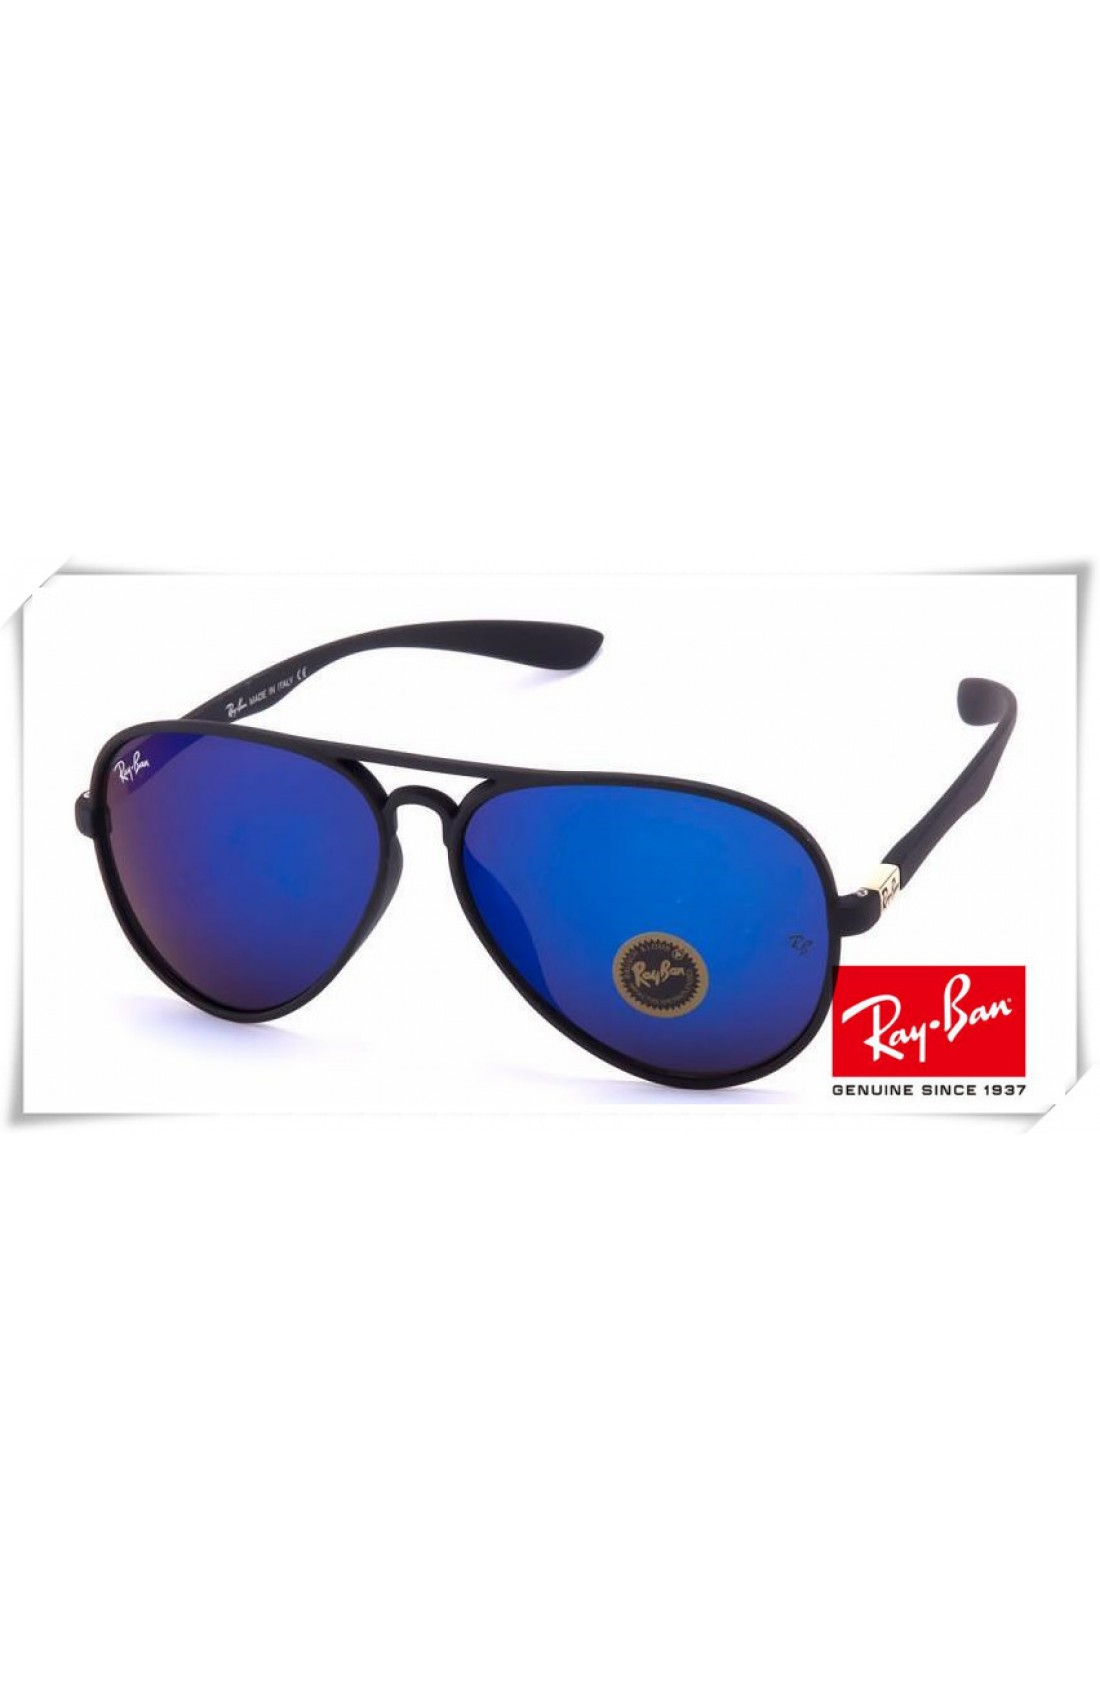 ray ban sunglasses genuine since 1937